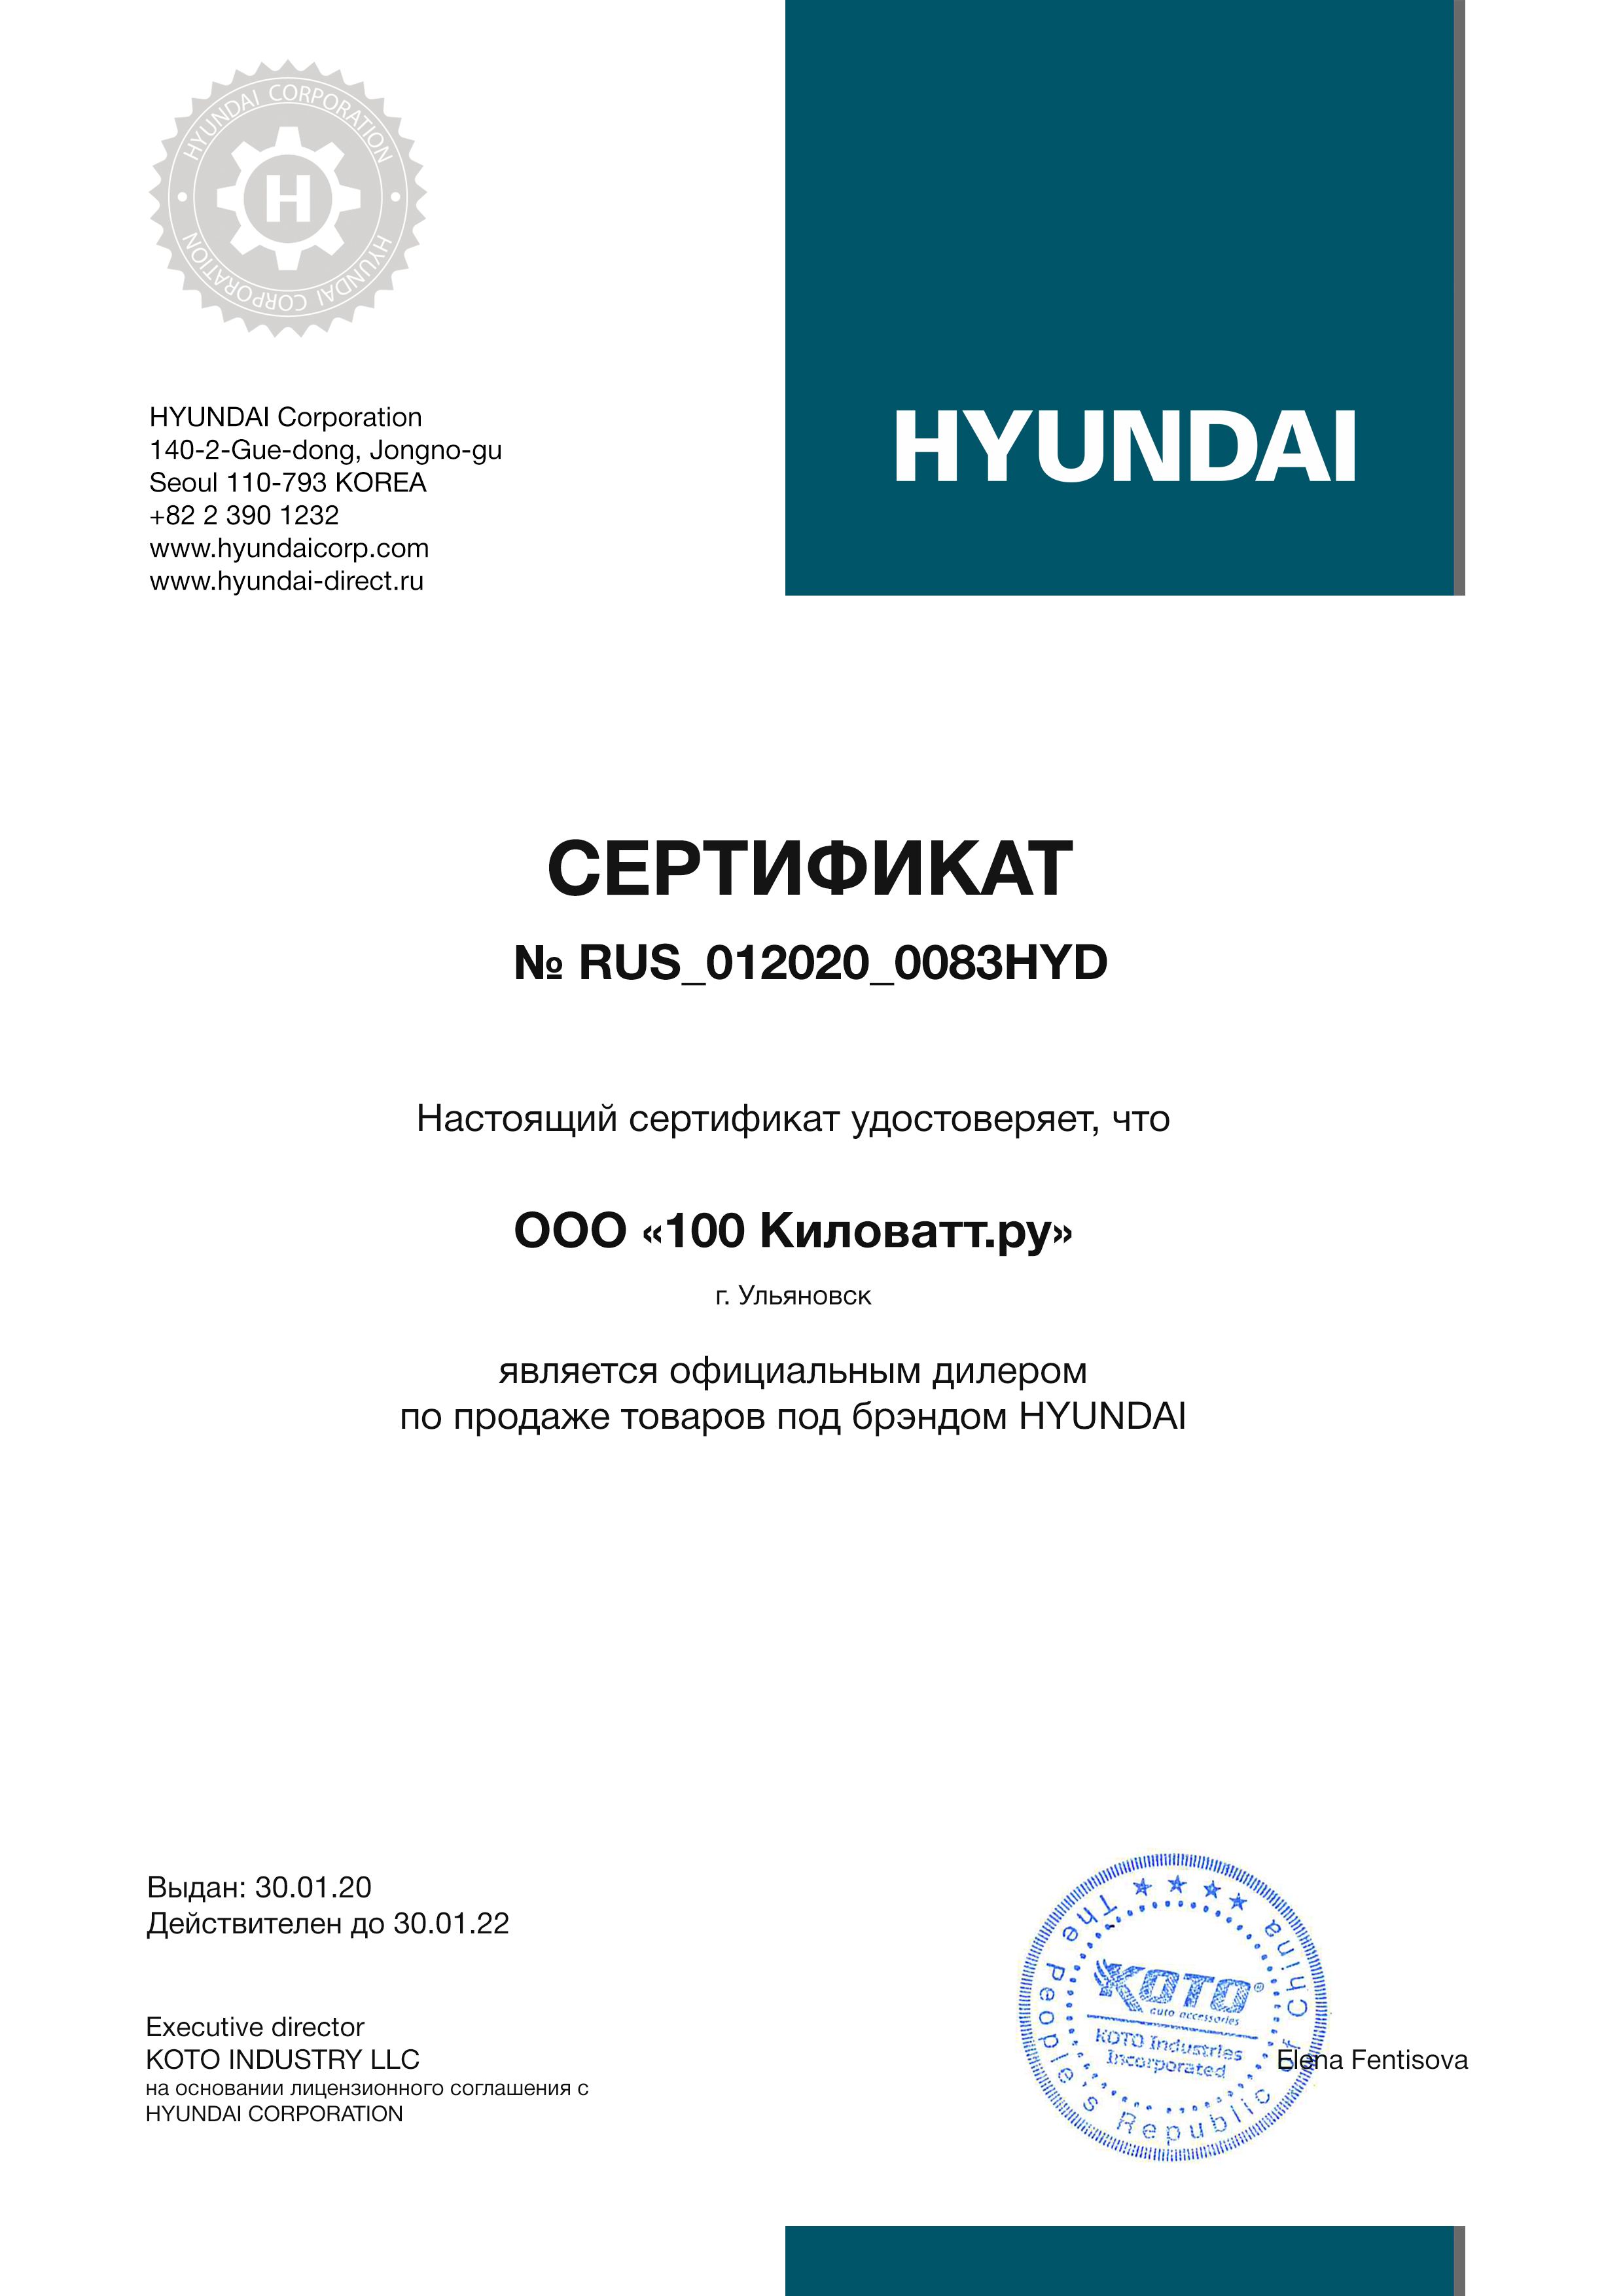 Hyundai - Сертификат дилера